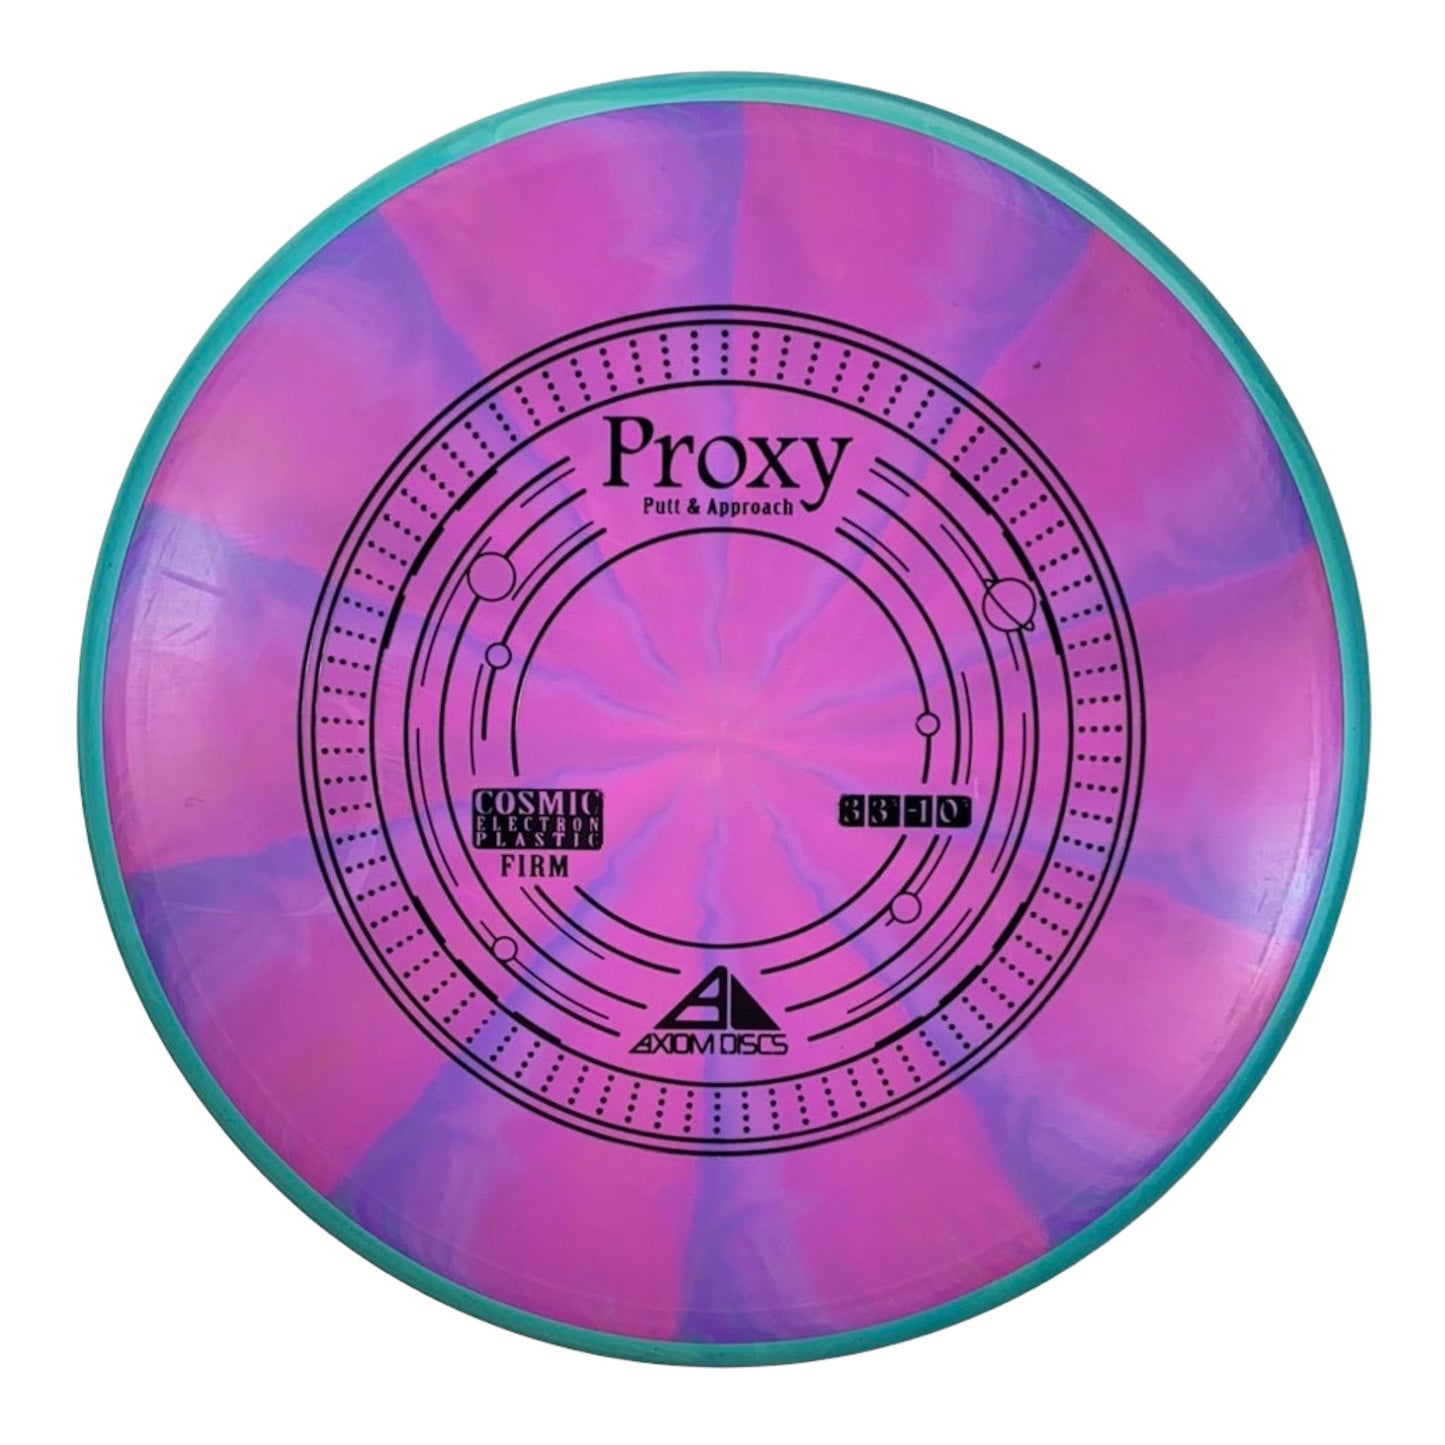 Axiom Discs Proxy | Cosmic Electron Firm | Purple/Green 168g